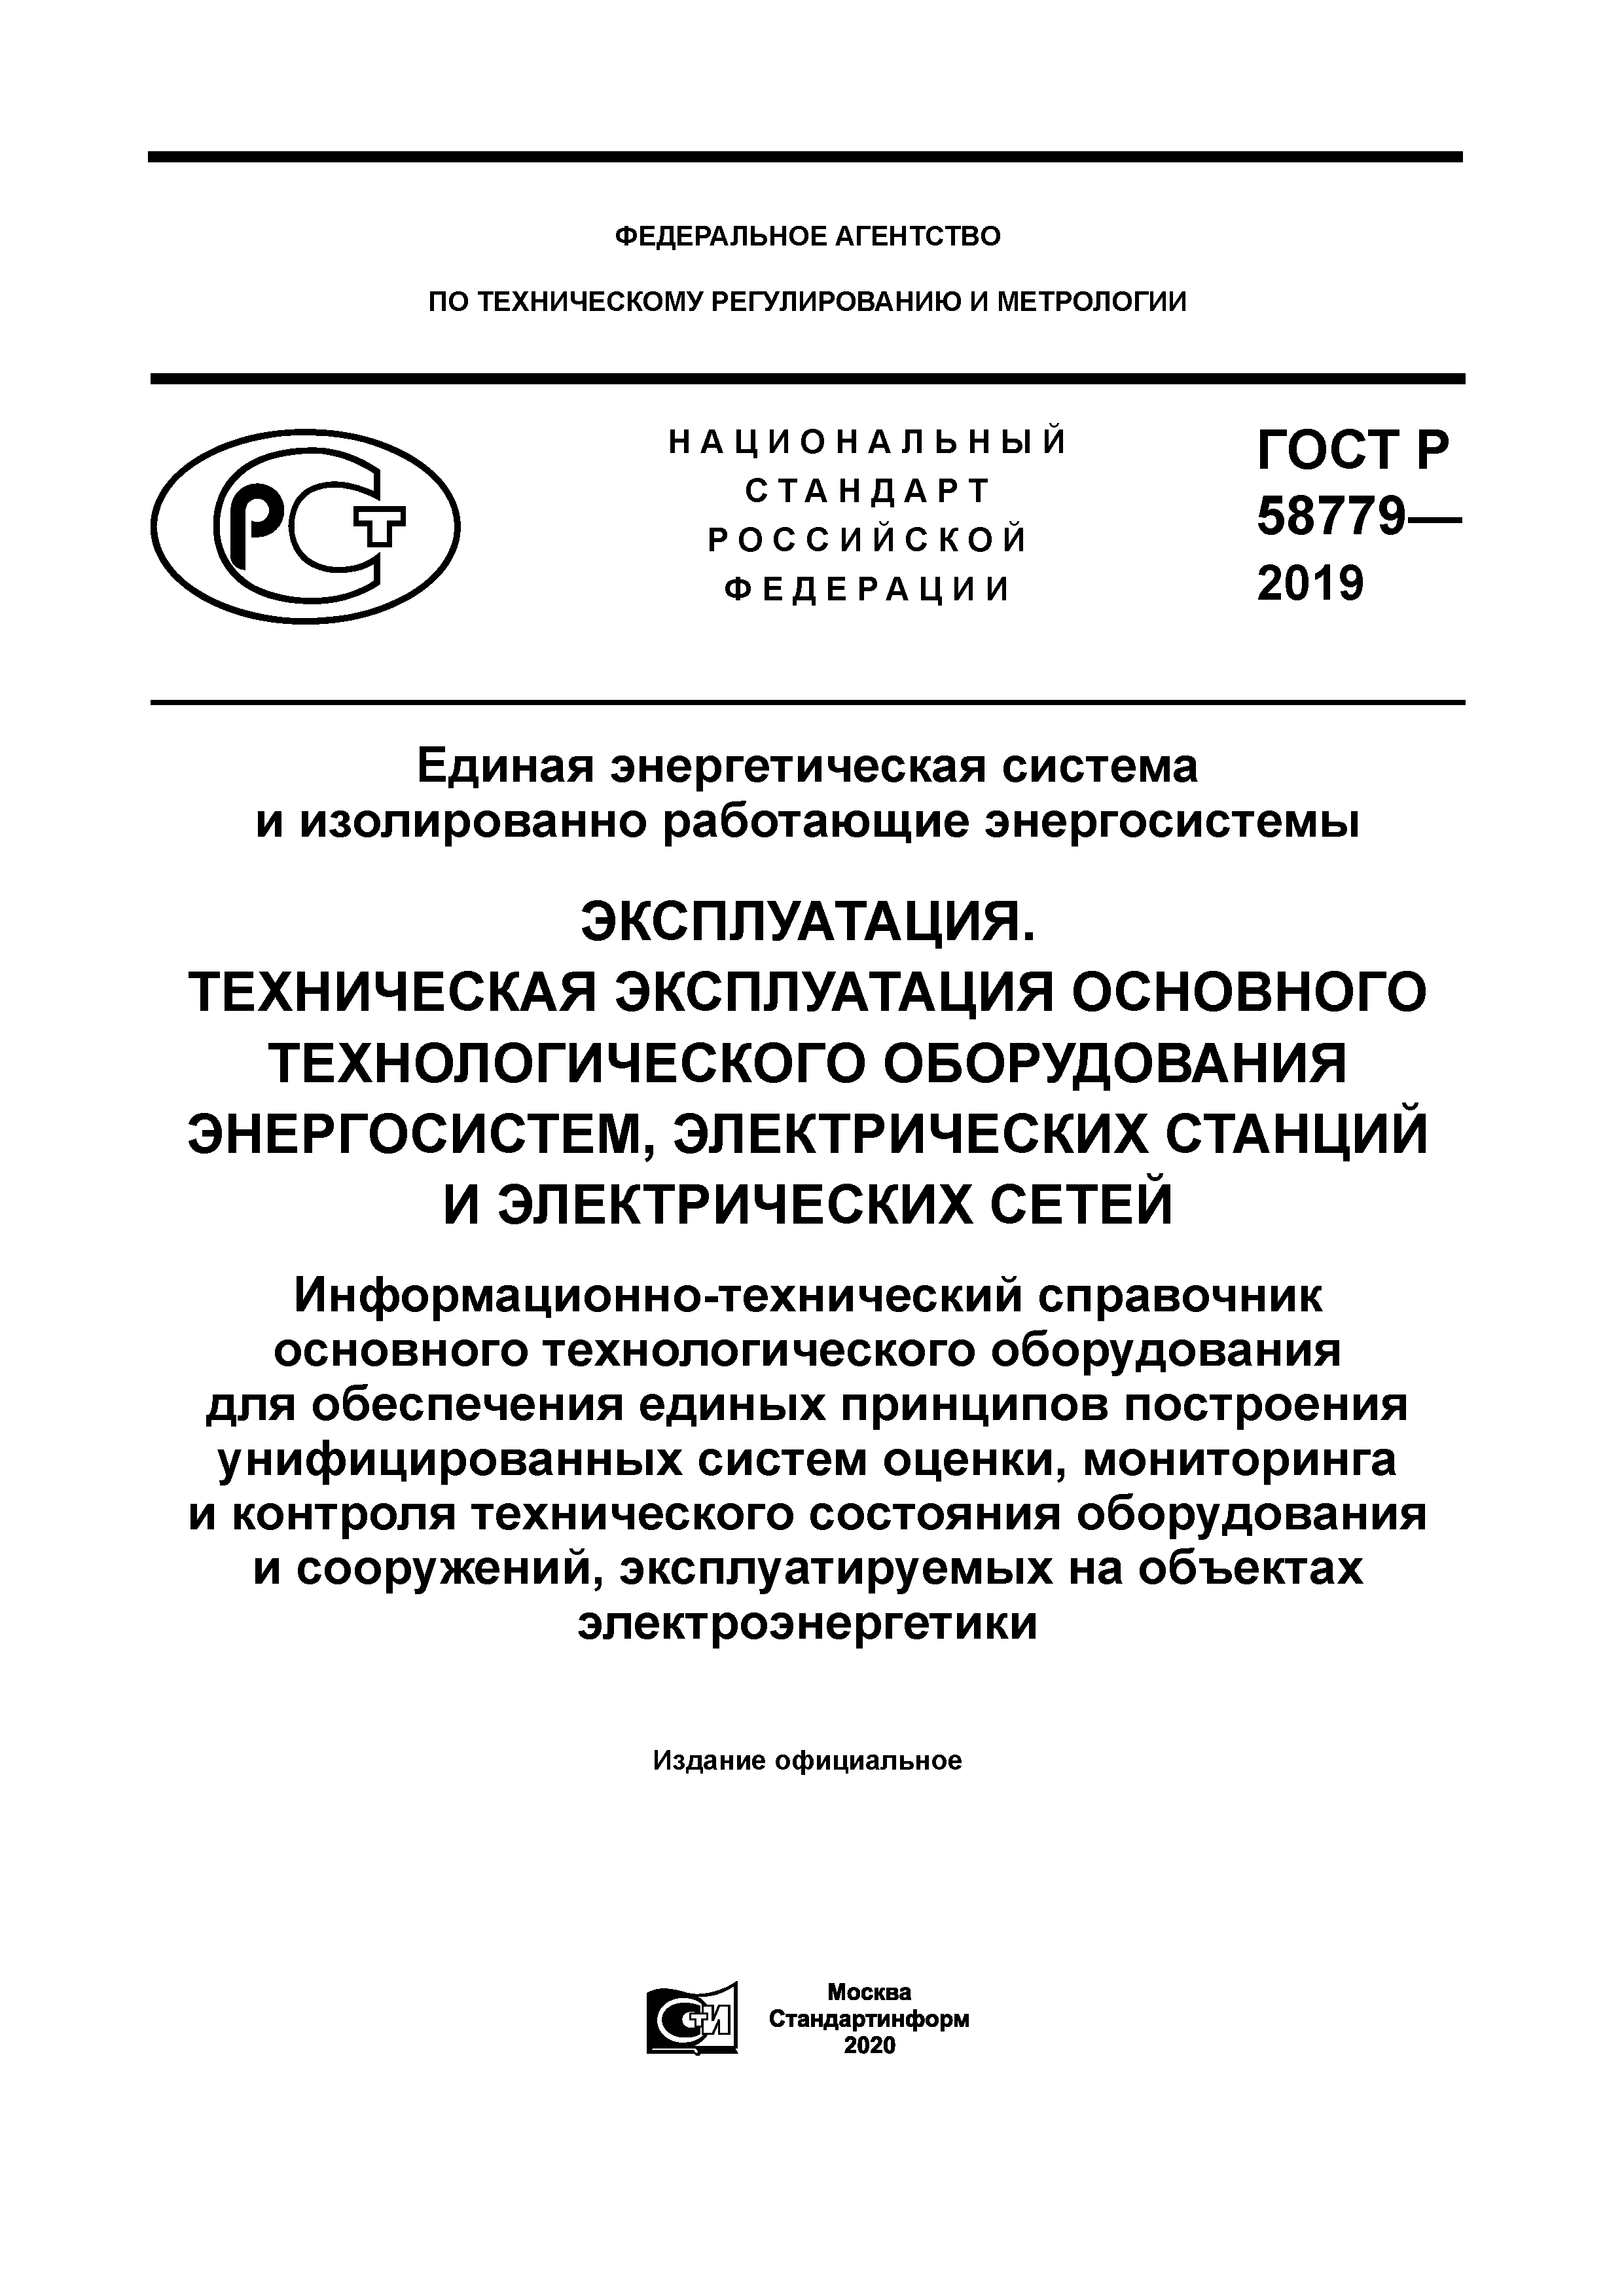 ГОСТ Р 58779-2019